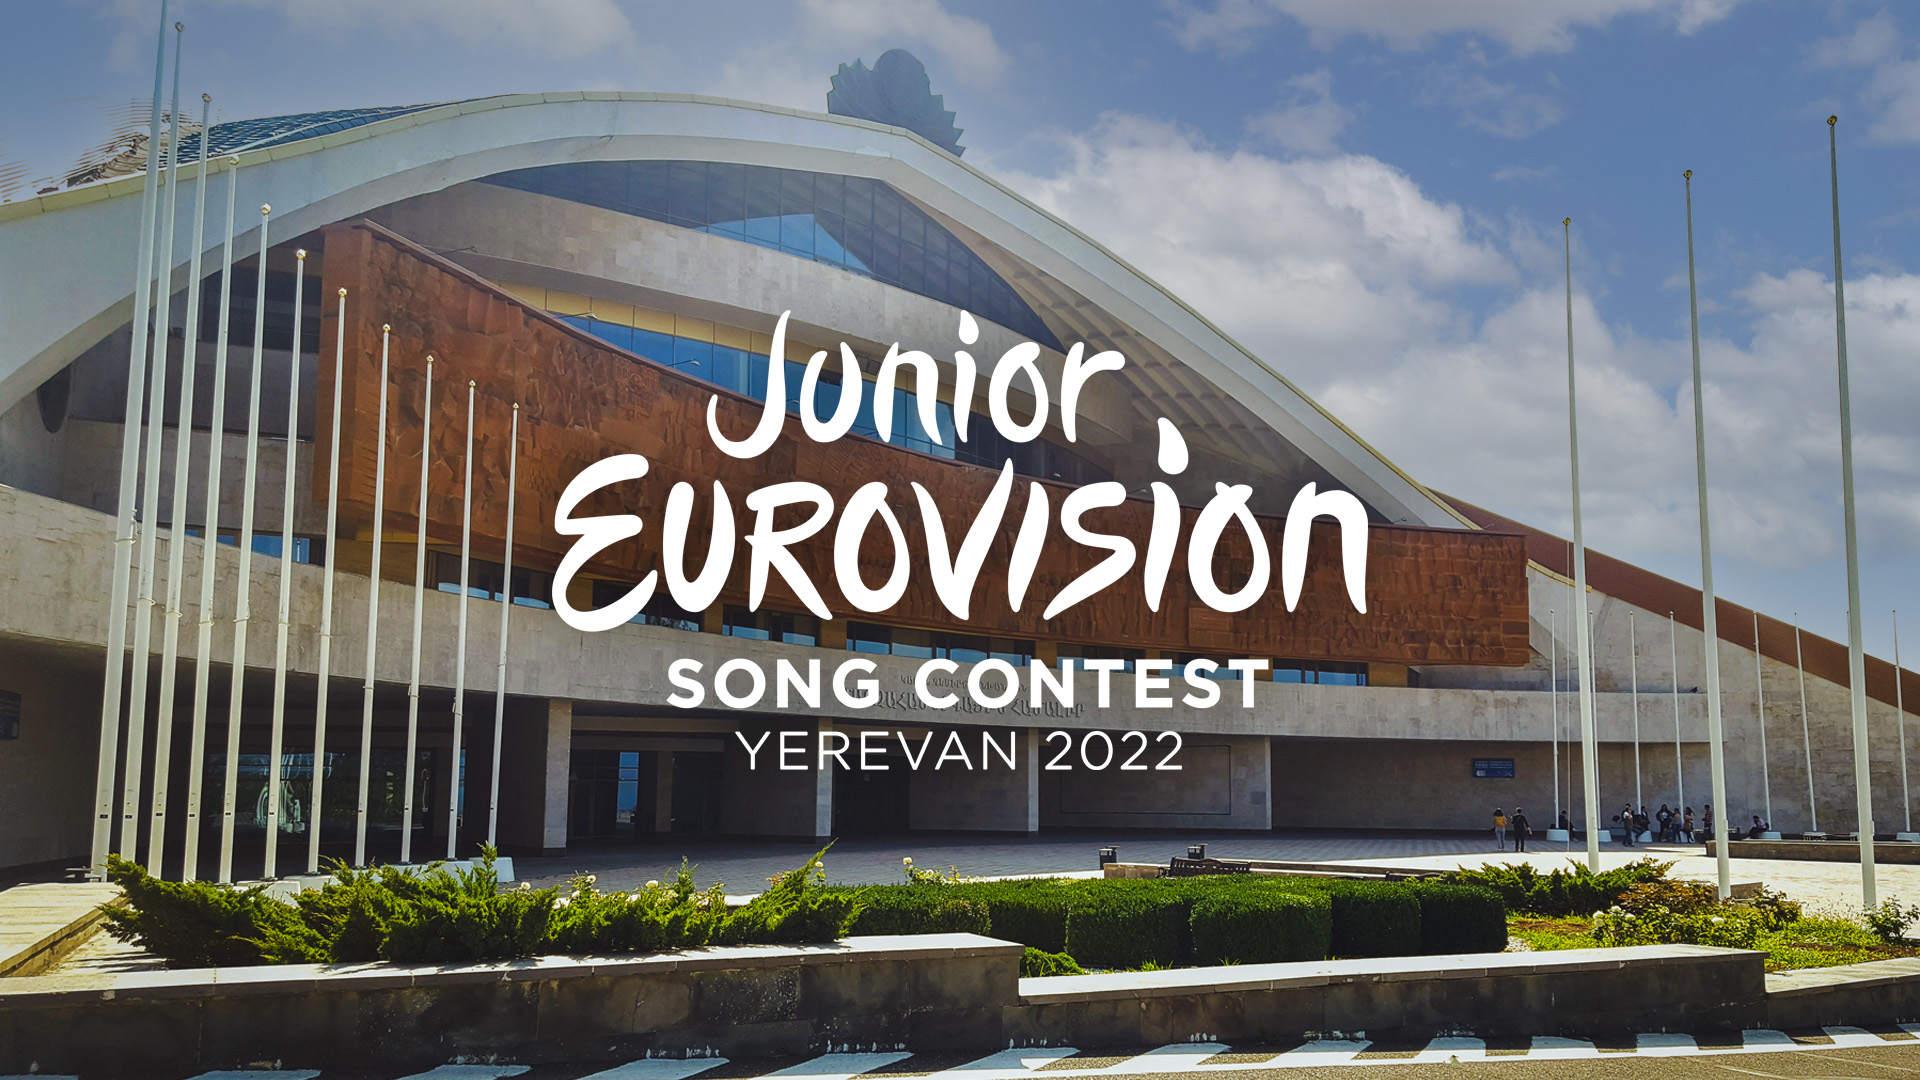 Junior Eurovision 2022 will be held on 11 December in Yerevan, Armenia